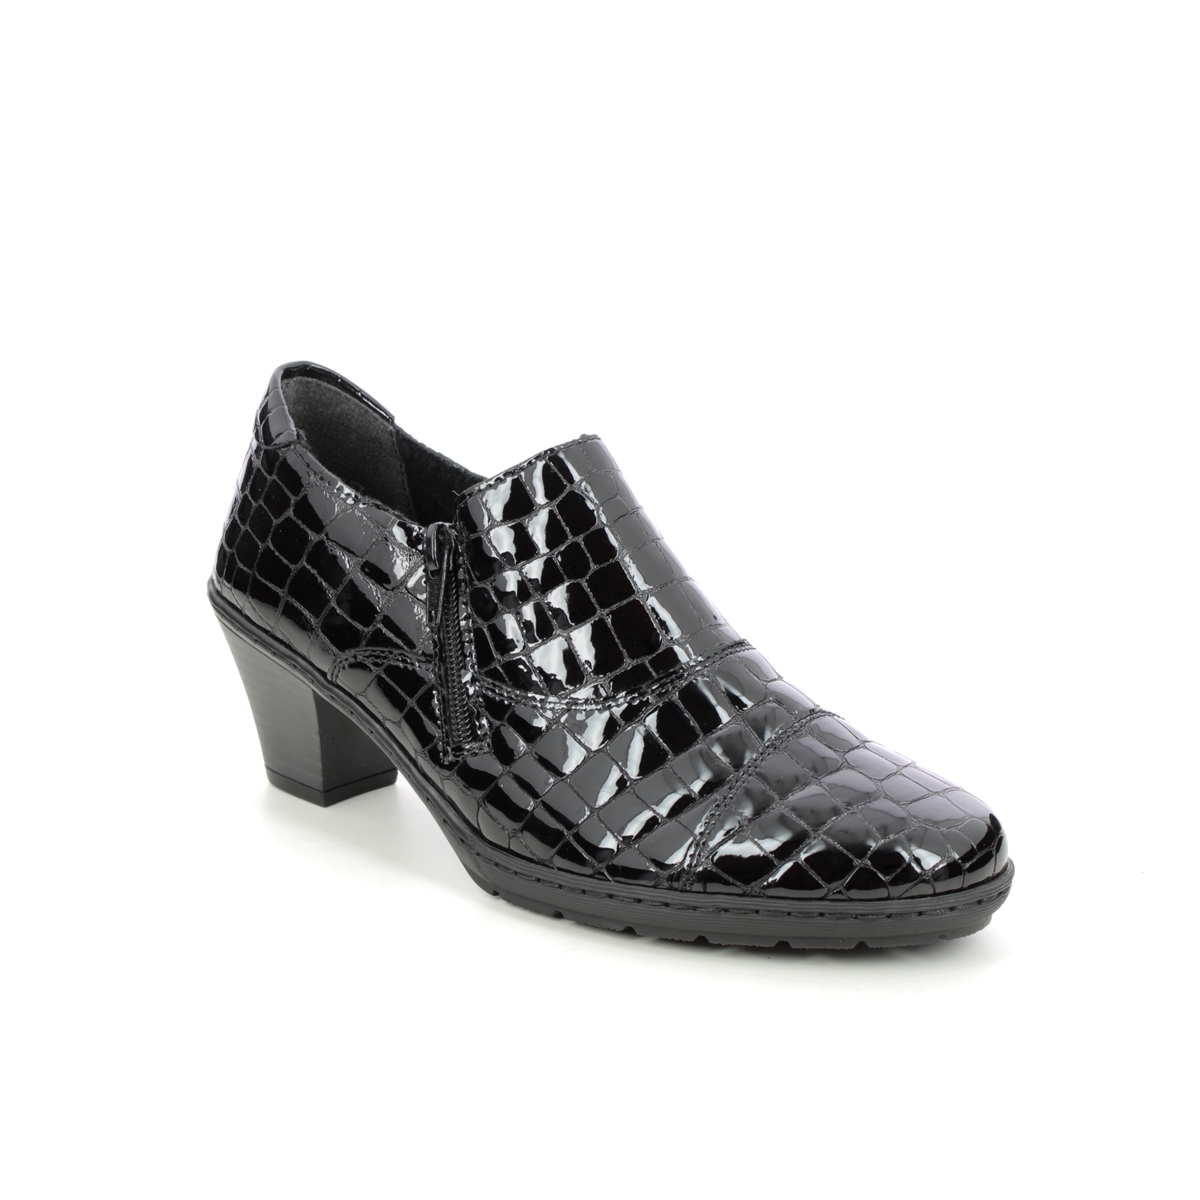 Rieker Addicap Black Croc Womens Shoe-Boots 57173-03 In Size 36 In Plain Black Croc Effect